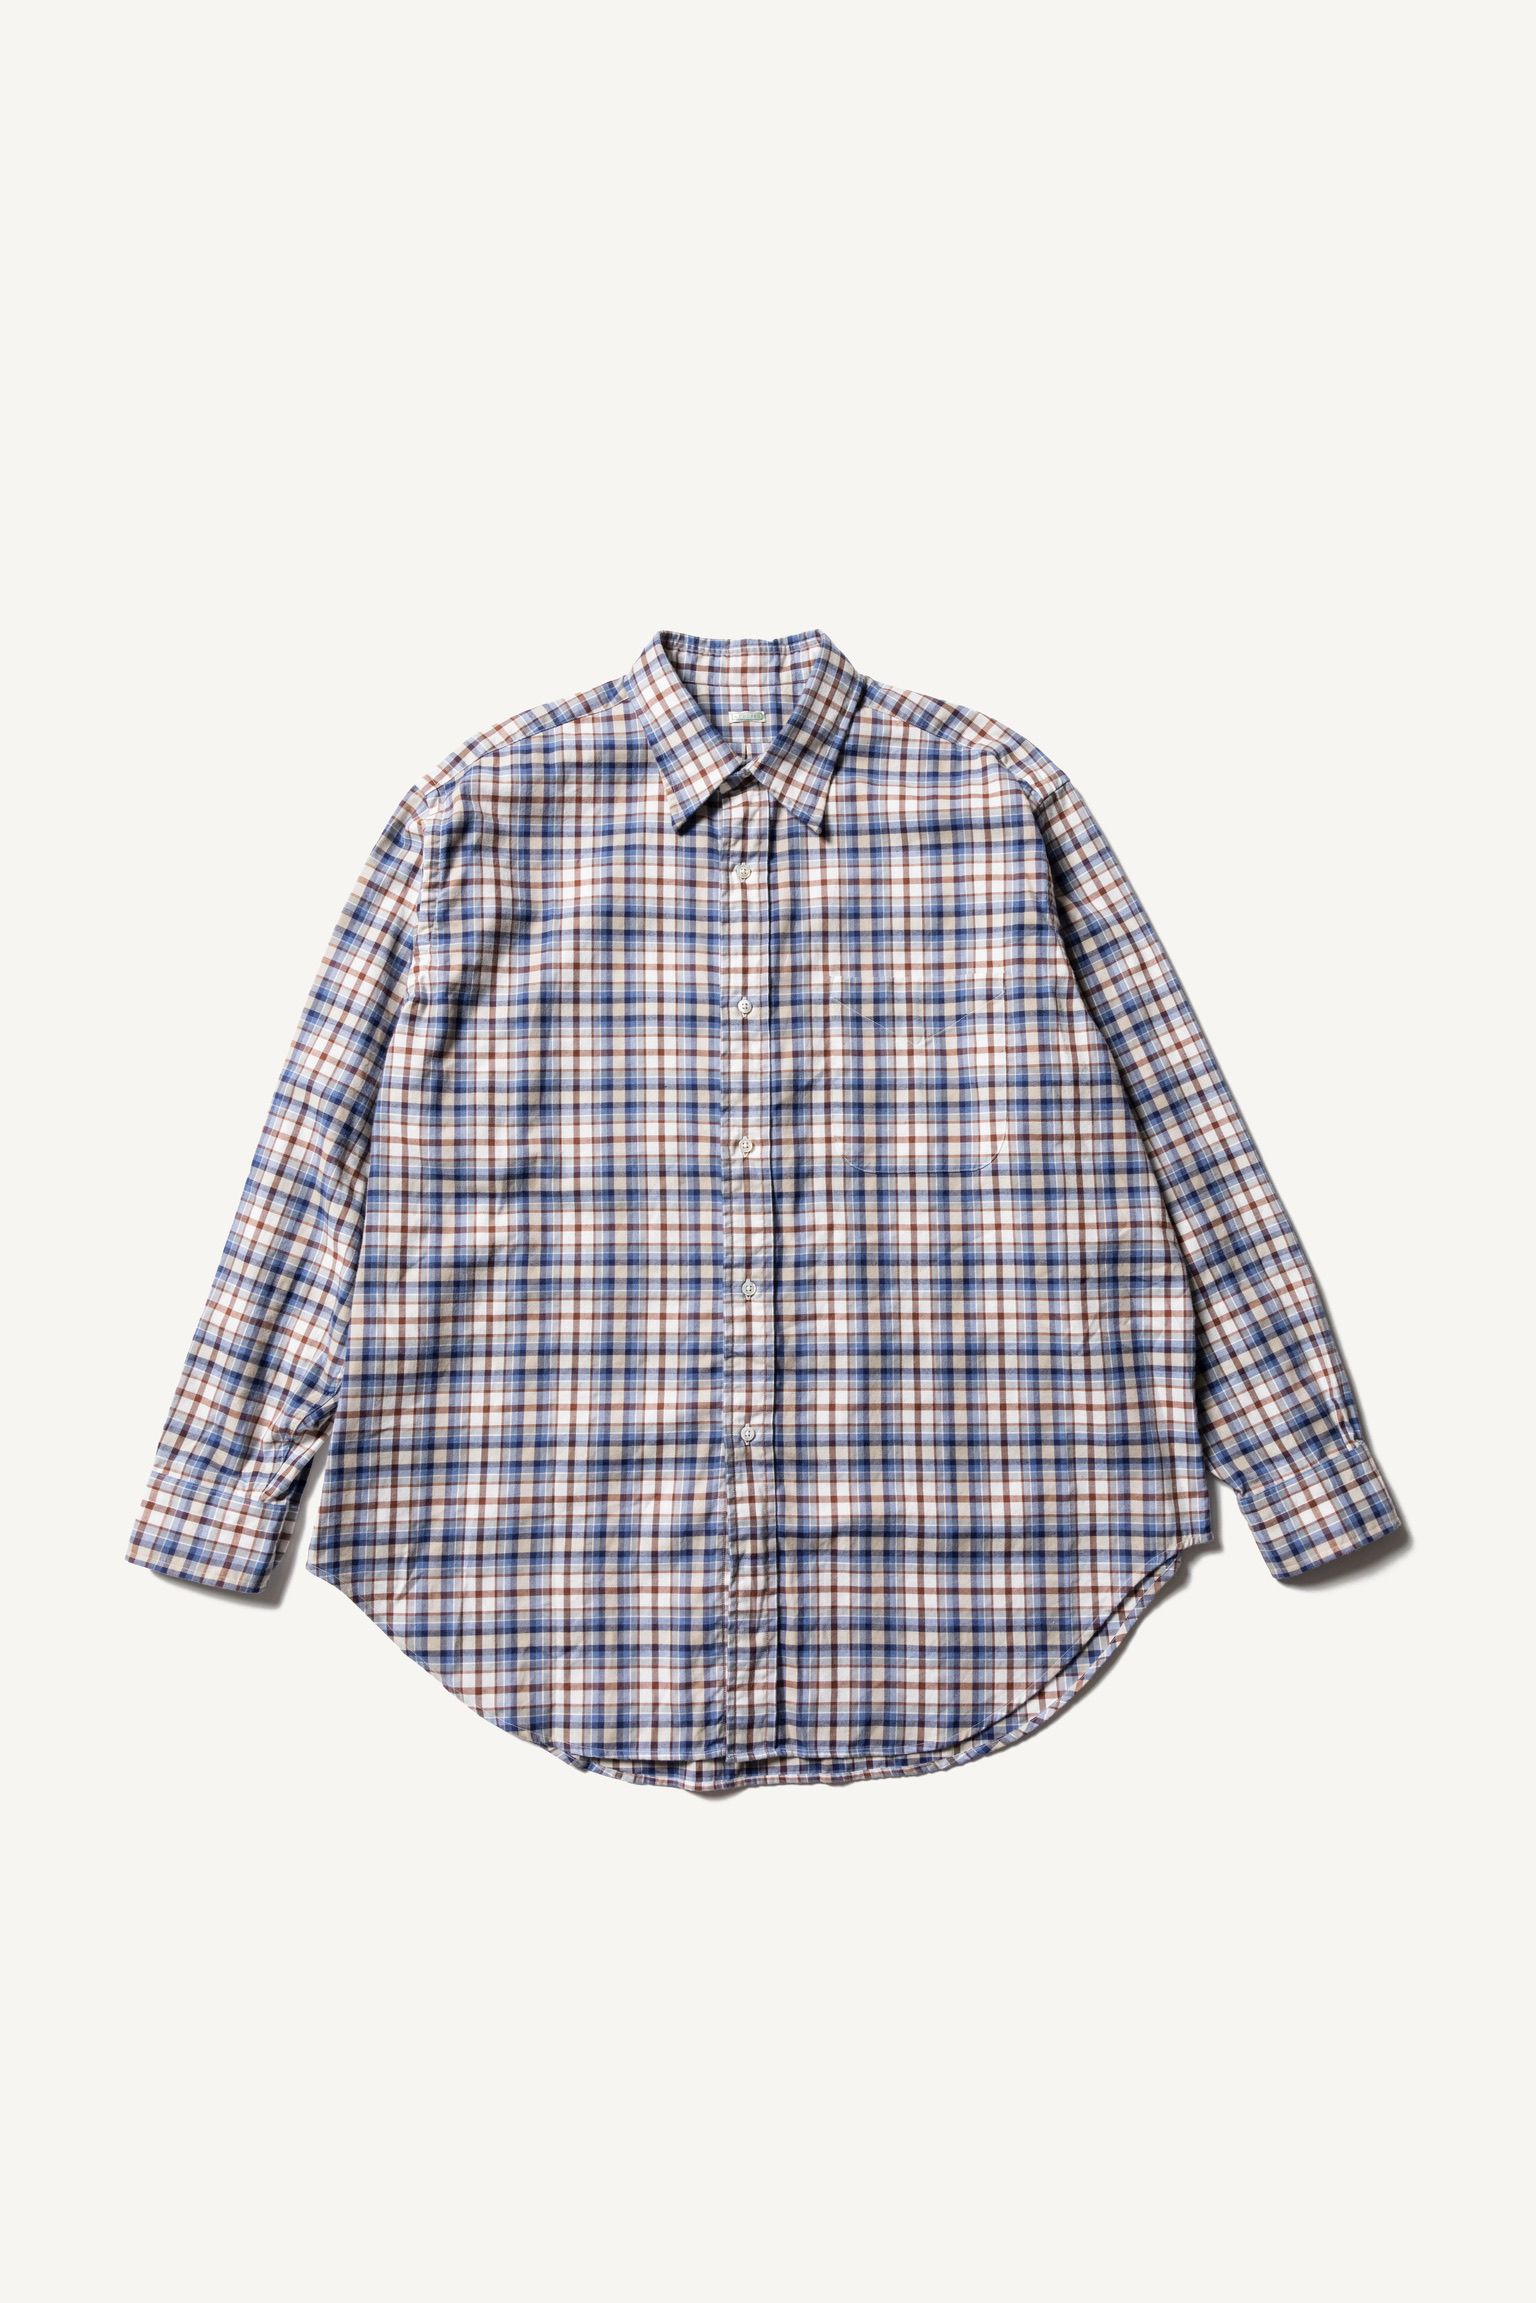 A.PRESSE - アプレッセ22FW Flannel Shirt(22AAP-02-06HA)BLUE